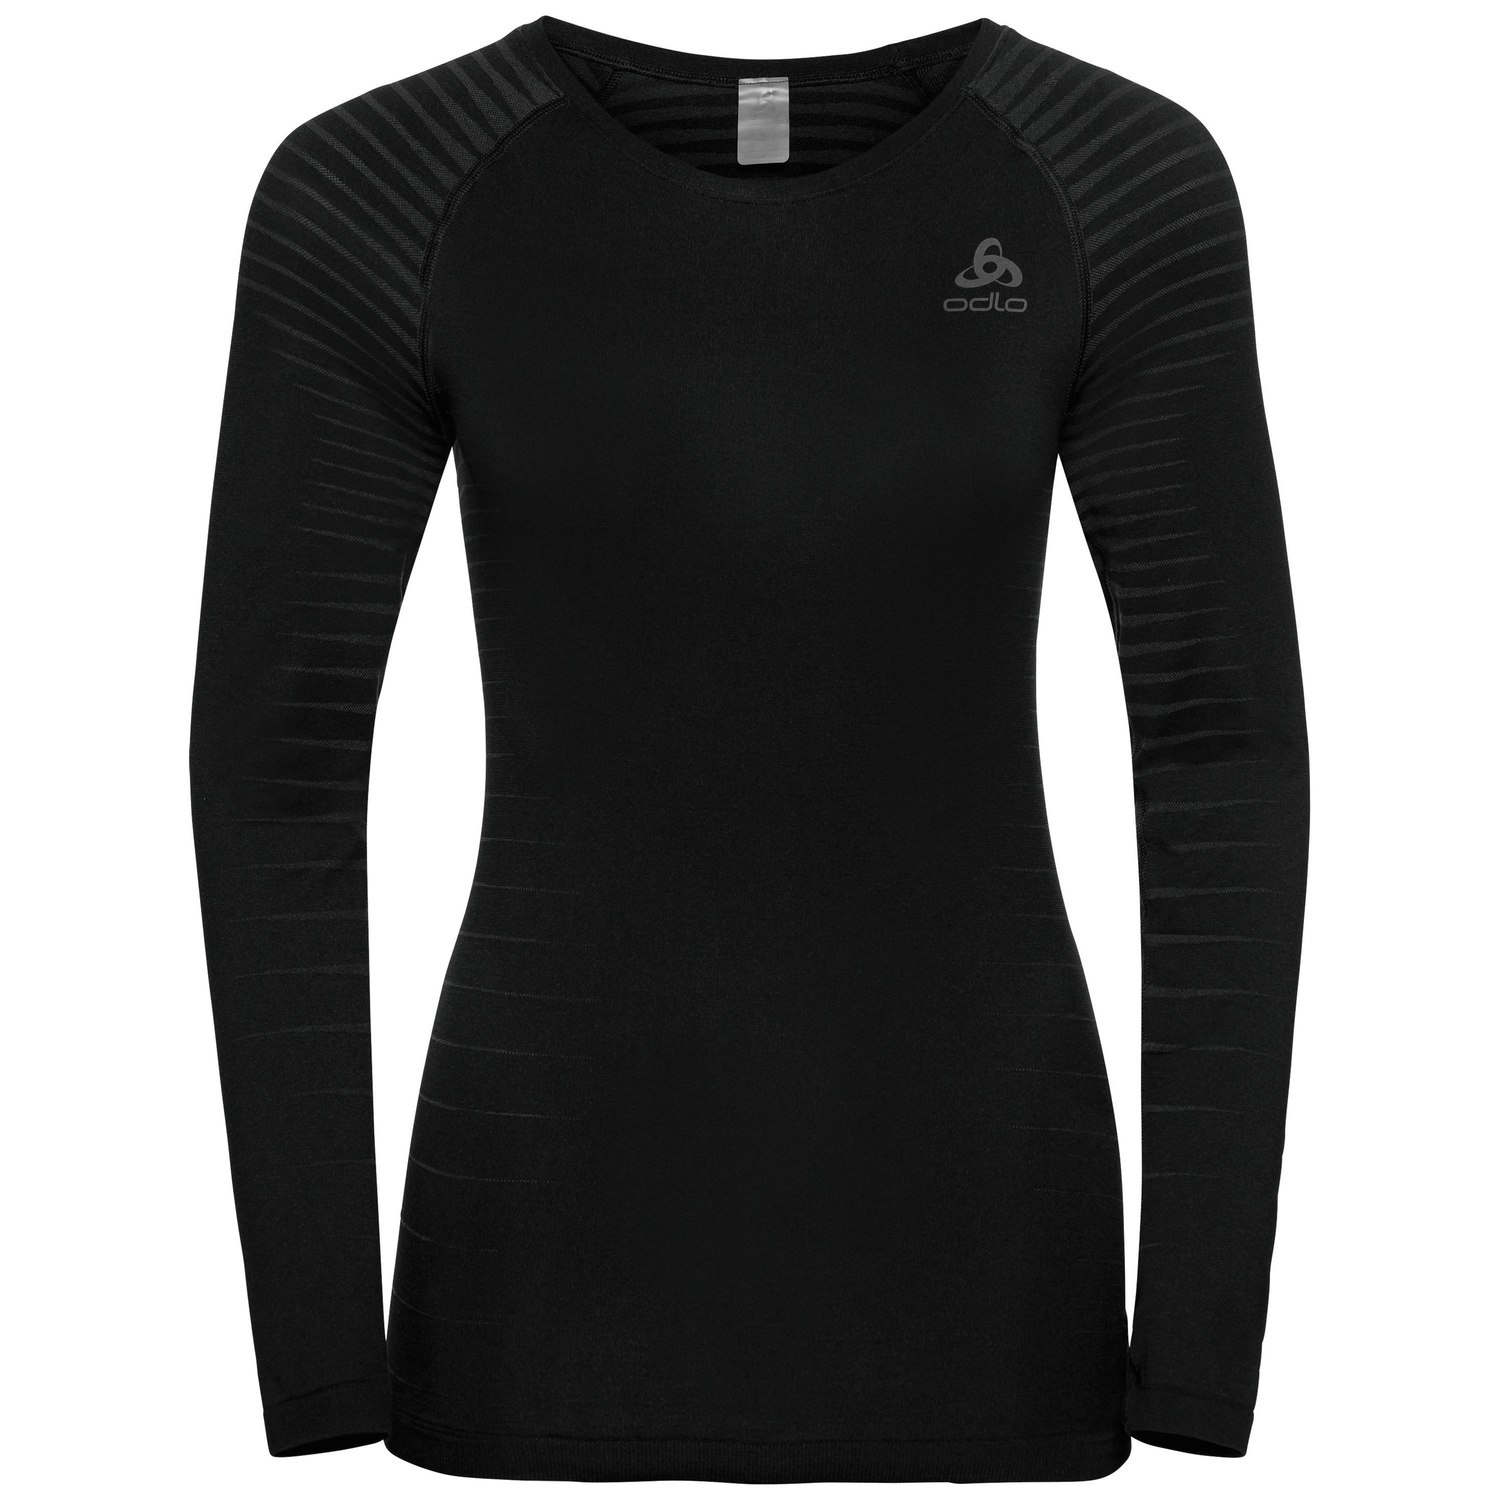 Produktbild von Odlo Performance Light Langarm-Unterhemd Damen 188141 - schwarz